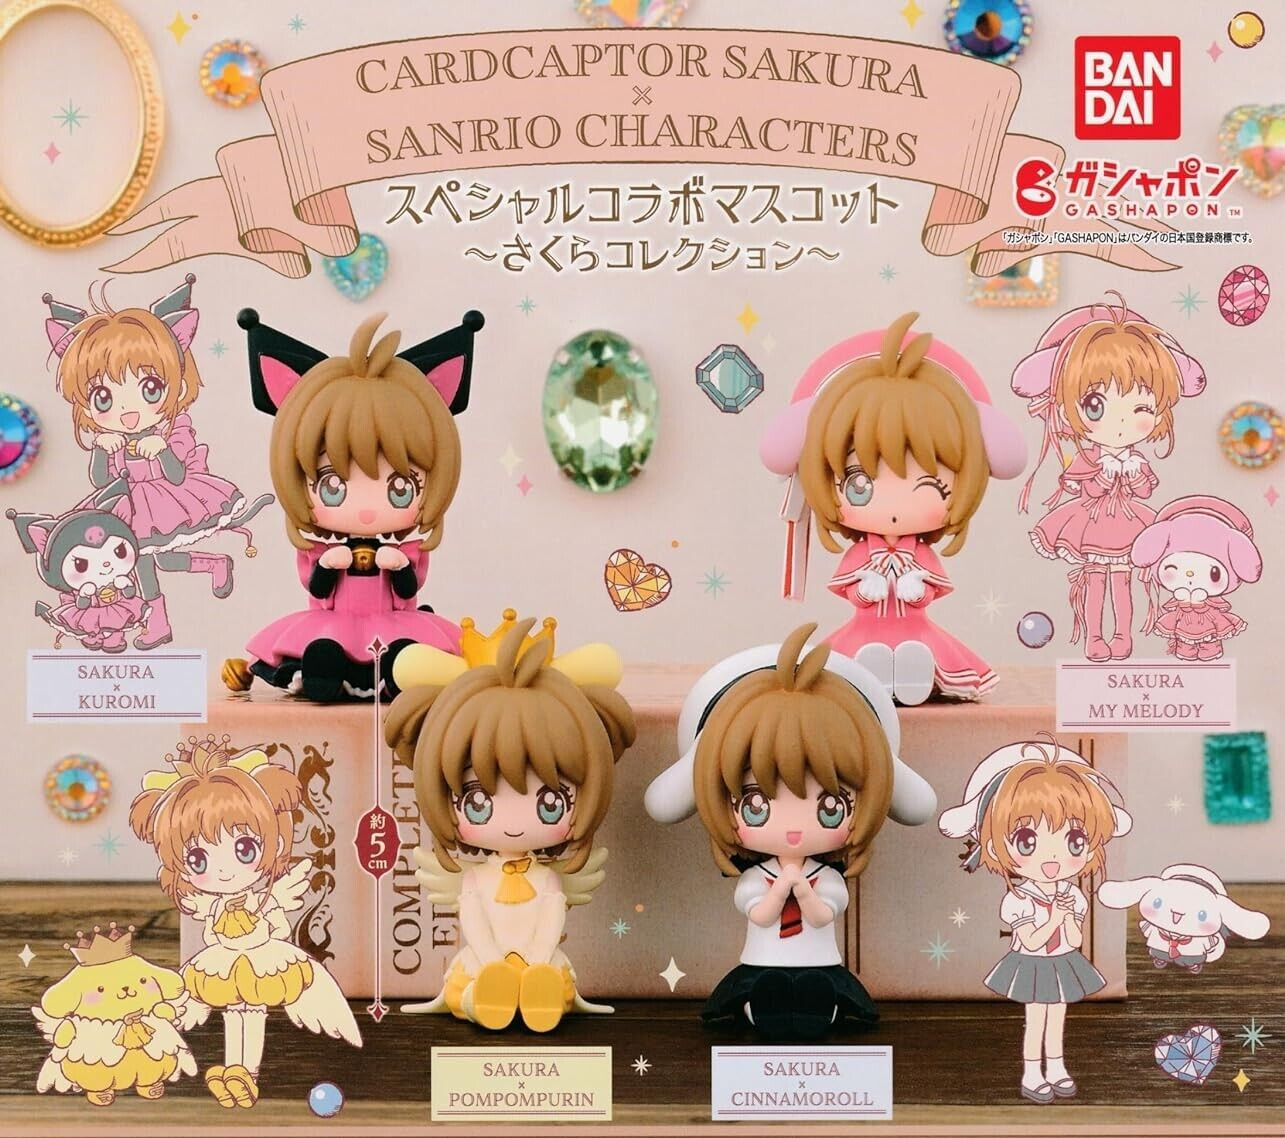 Card Captor Sakura x Sanrio Characters Total 4 types Complete Set Capsule Toy